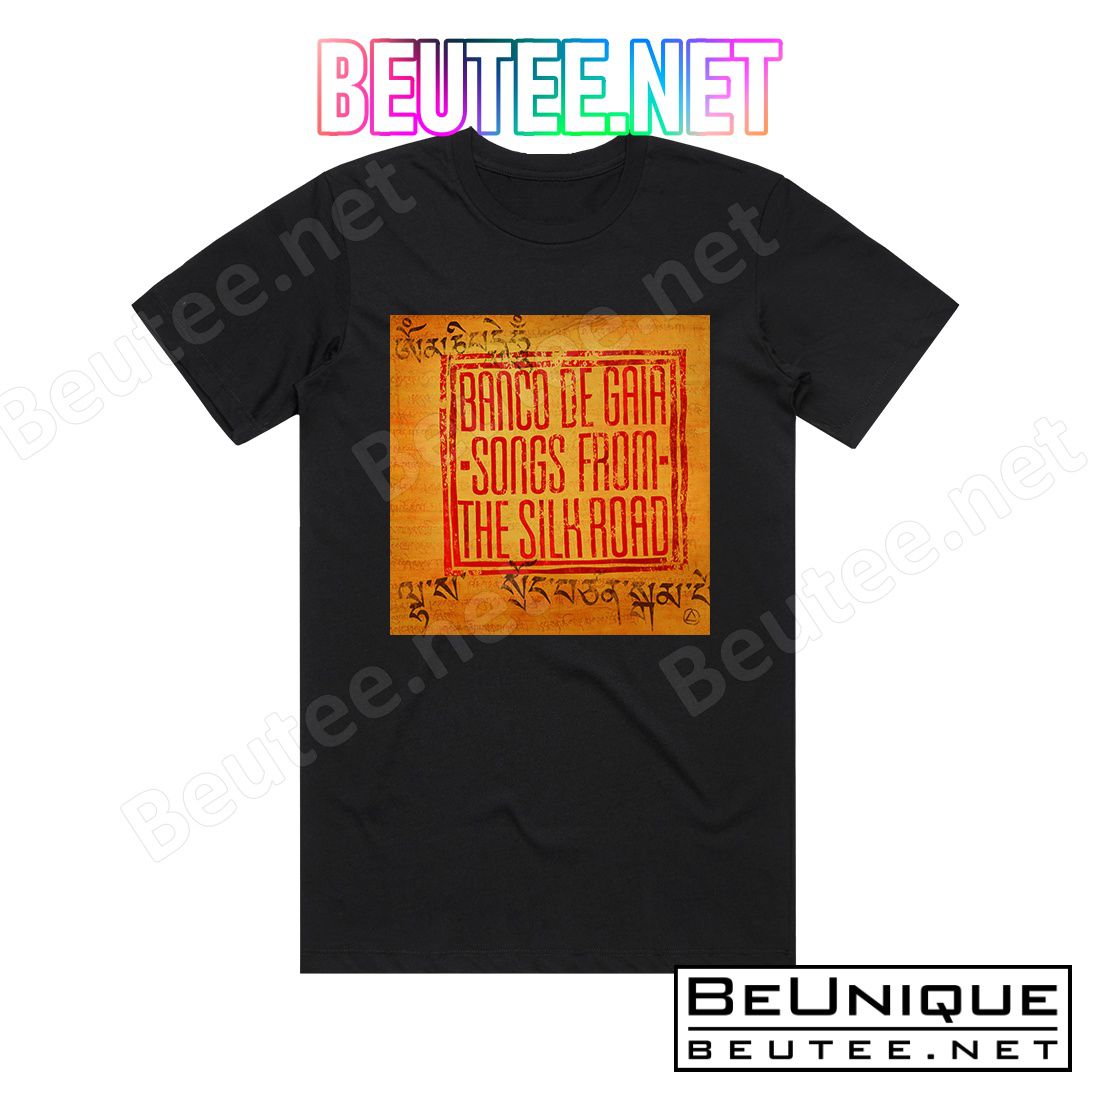 Banco de Gaia Songs From The Silk Road Album Cover T-Shirt